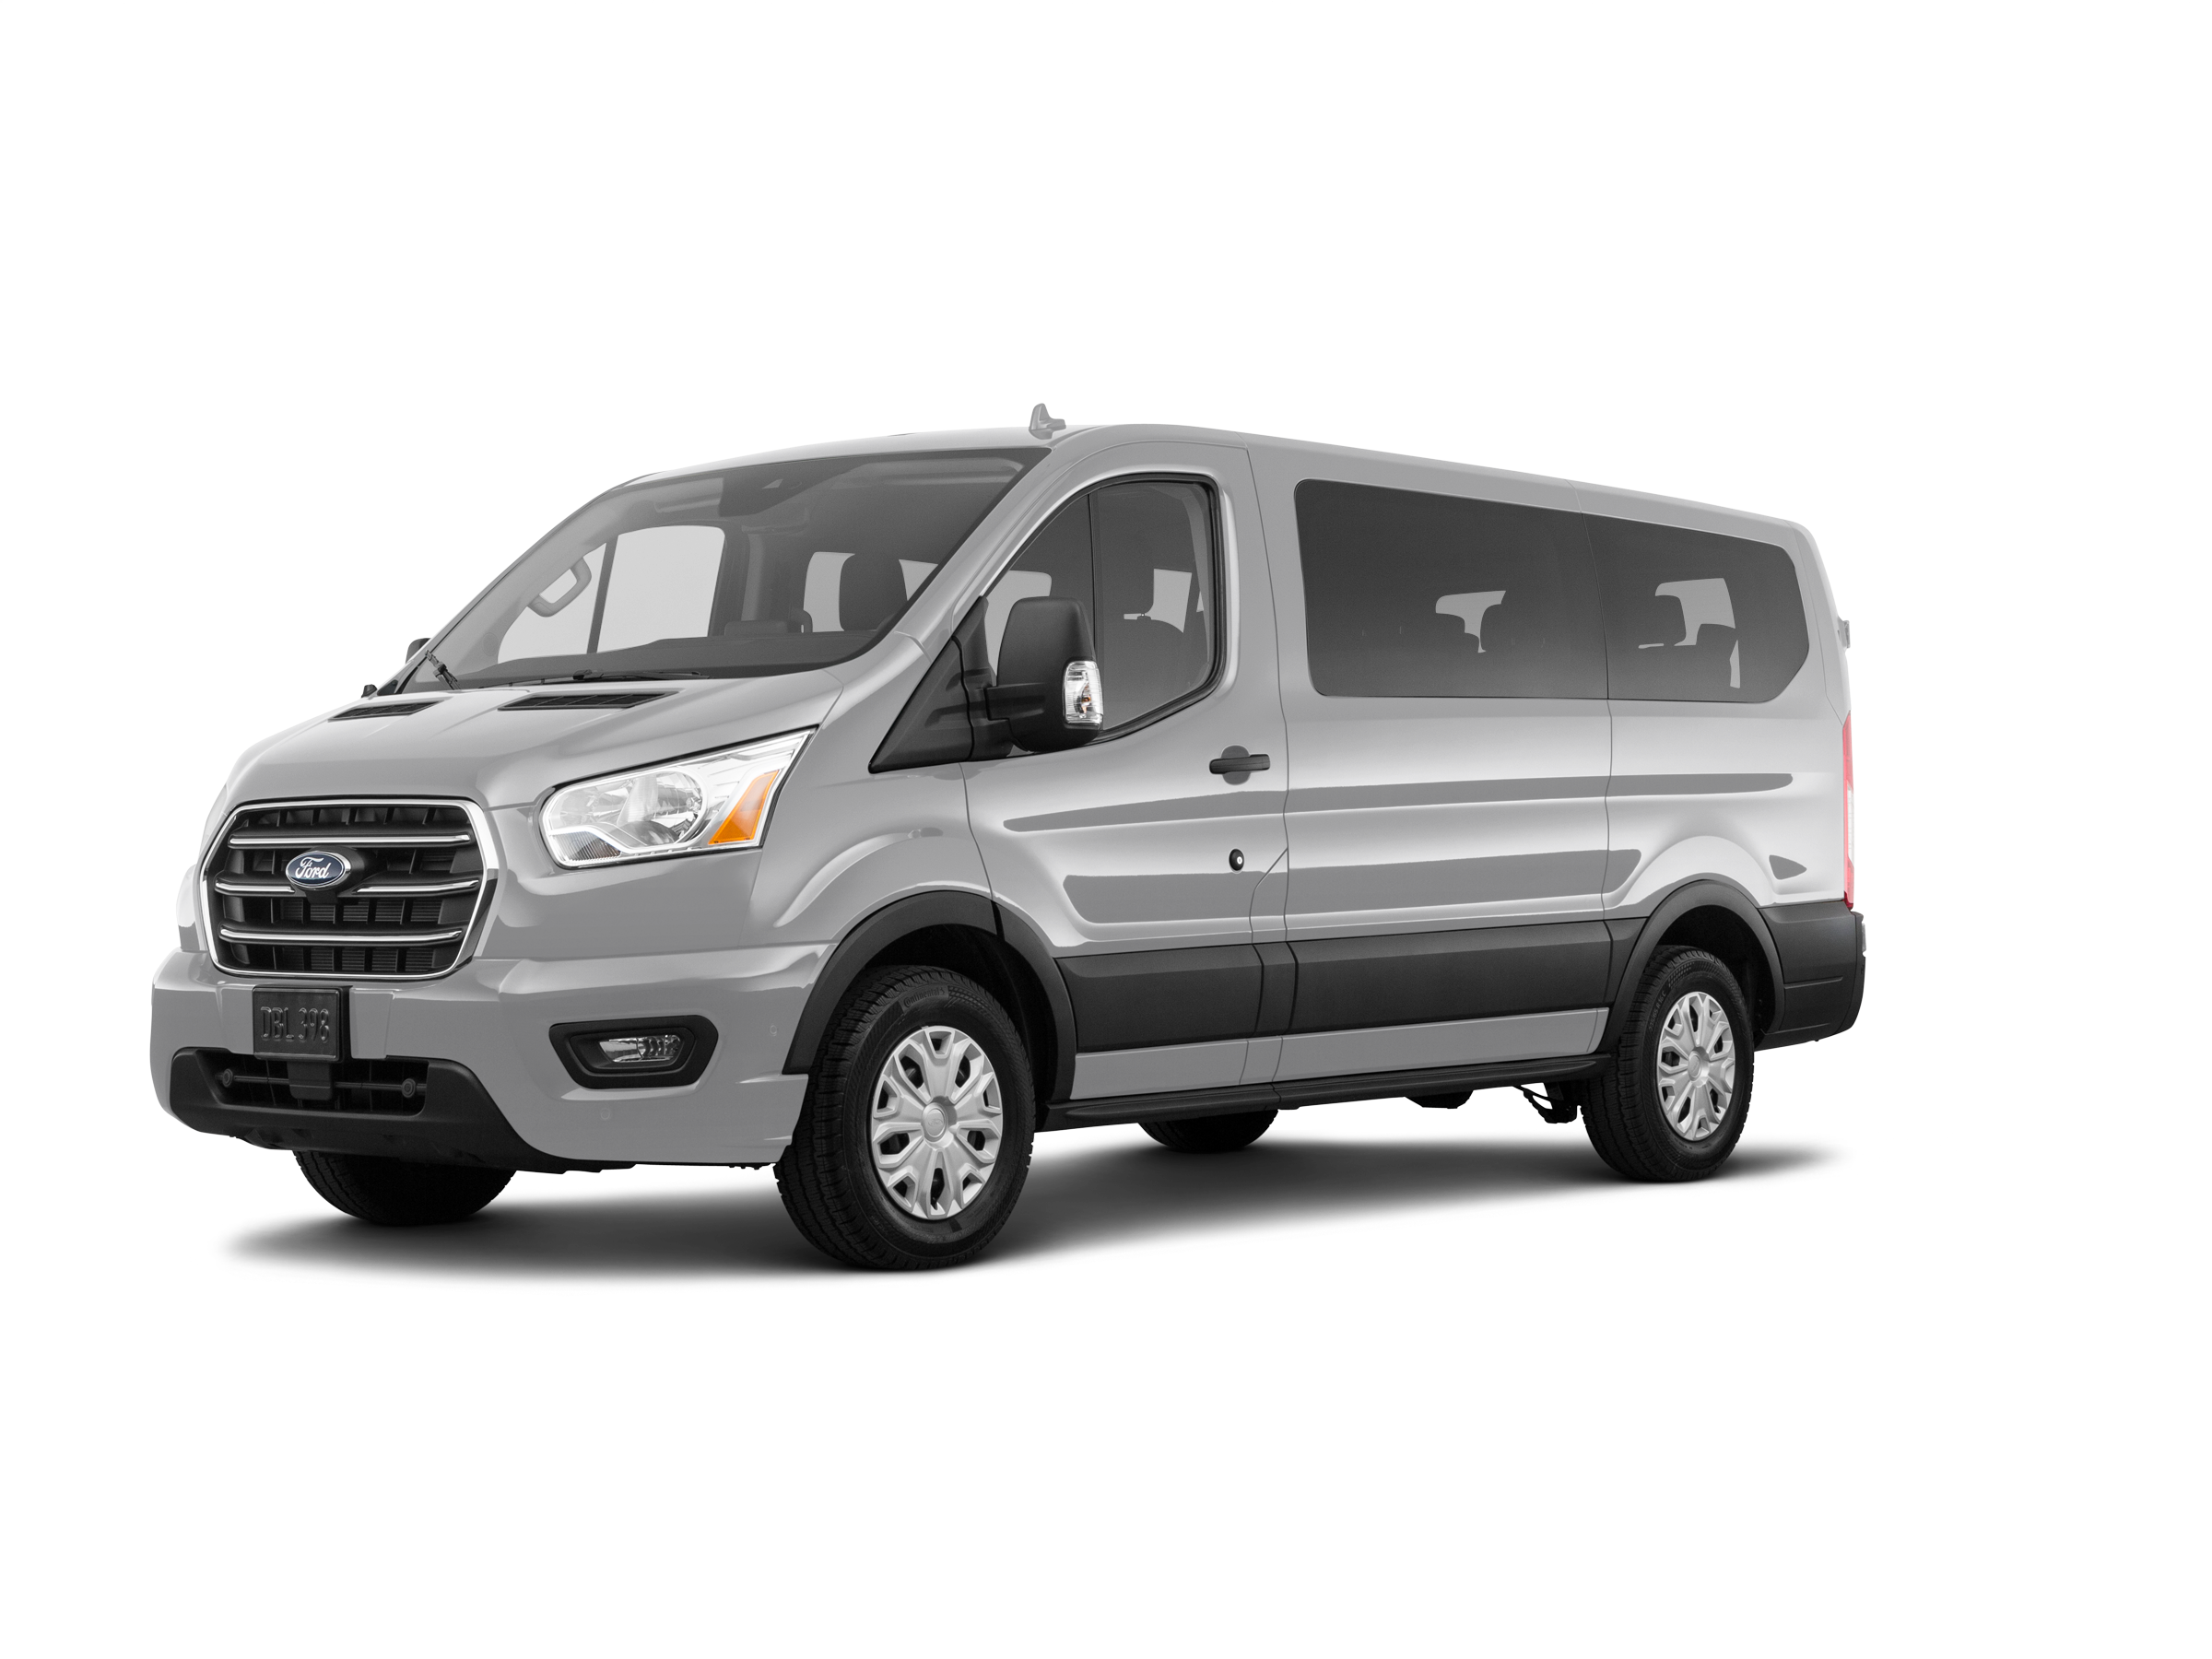 2020-Ford-Transit 150 Passenger Van-front_14322_032_2400x1800_UX_nologo.png